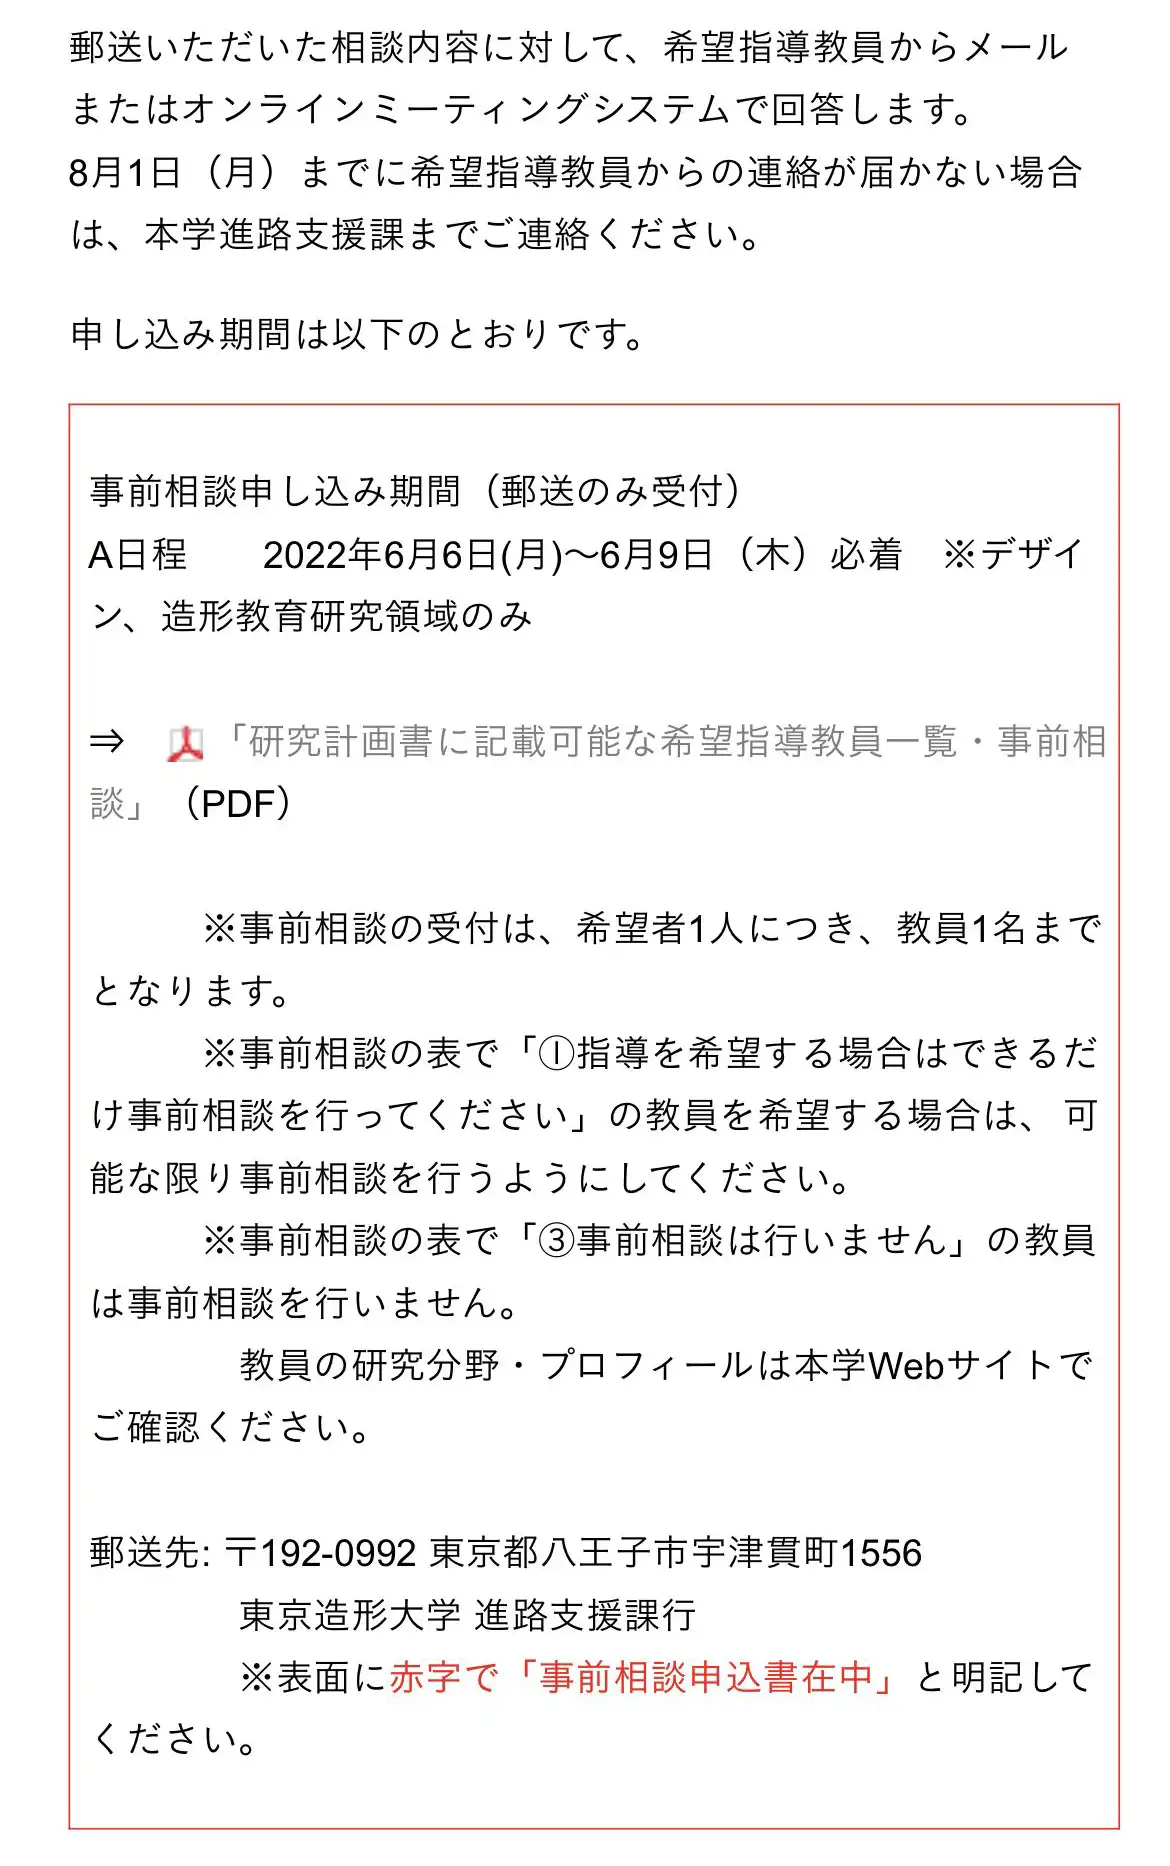 72%OFF!】 EXLEAD JAPAN福彫 表札 クリアーガラス アルミ鋳物 GPL-203K